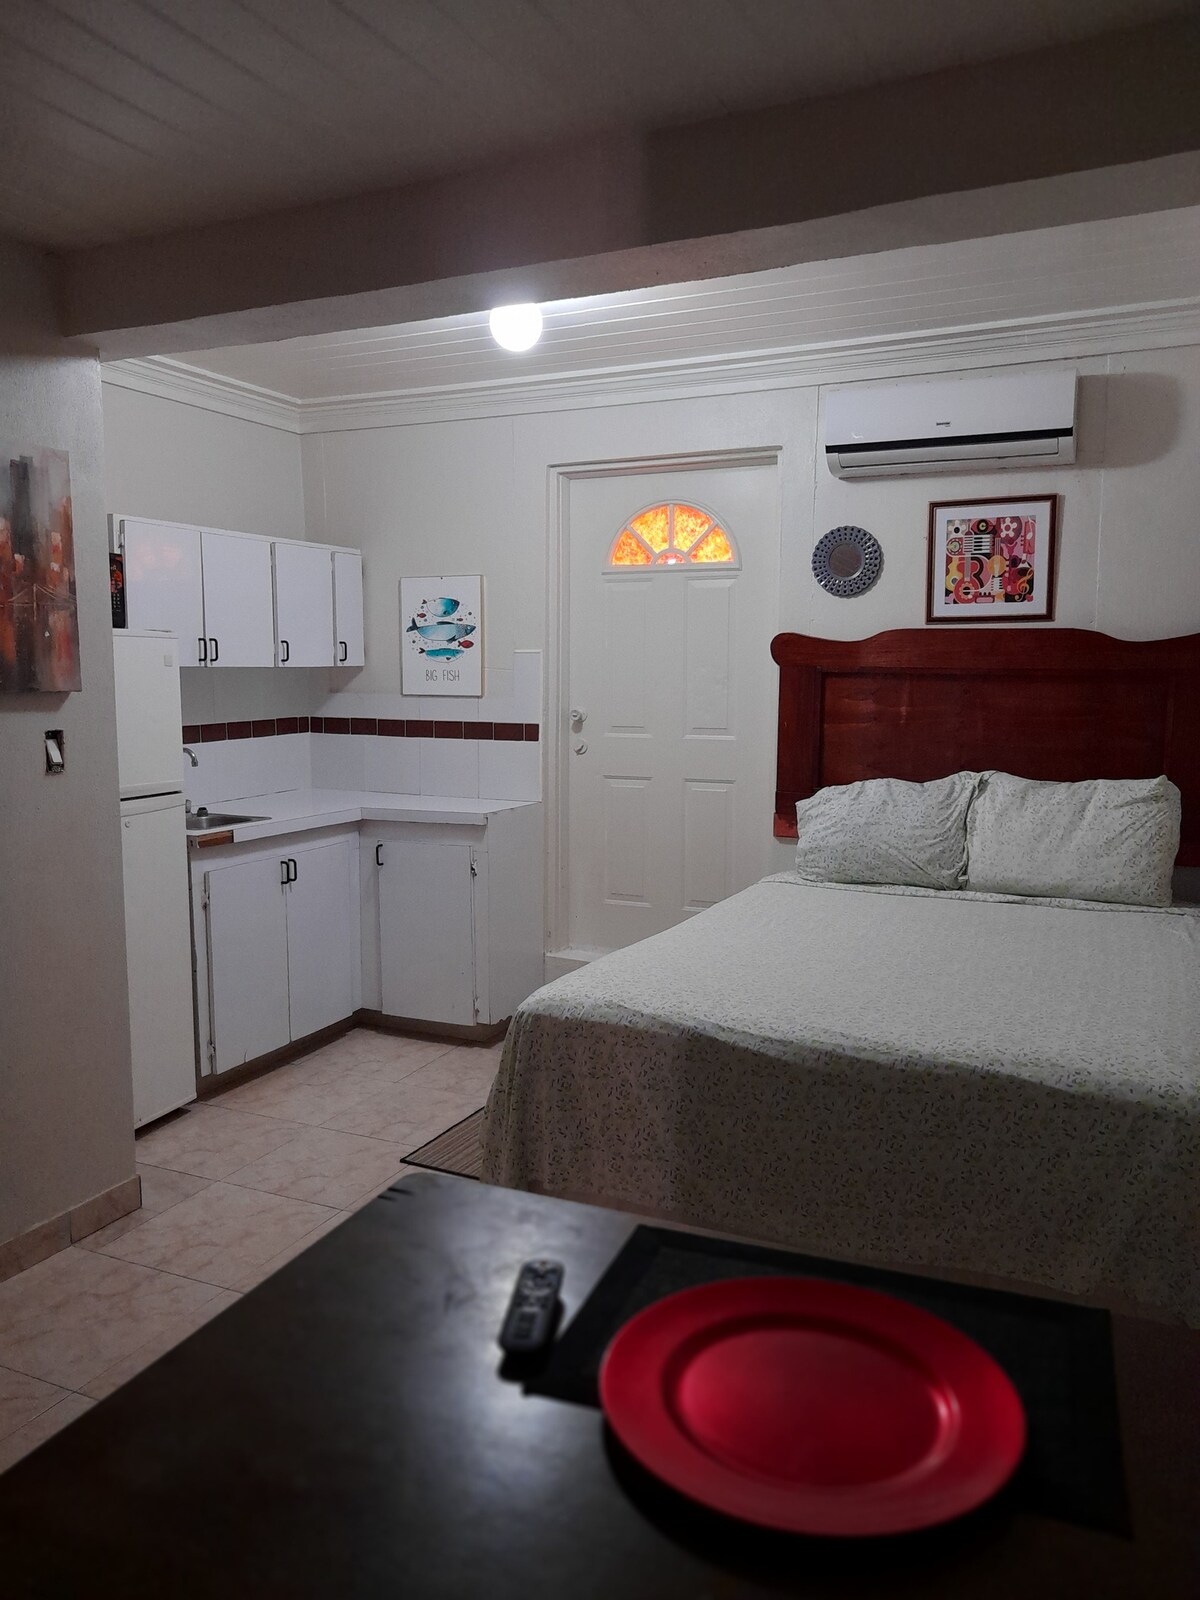 Charming 1- bedroom's hostel in Nassau,Bahamas